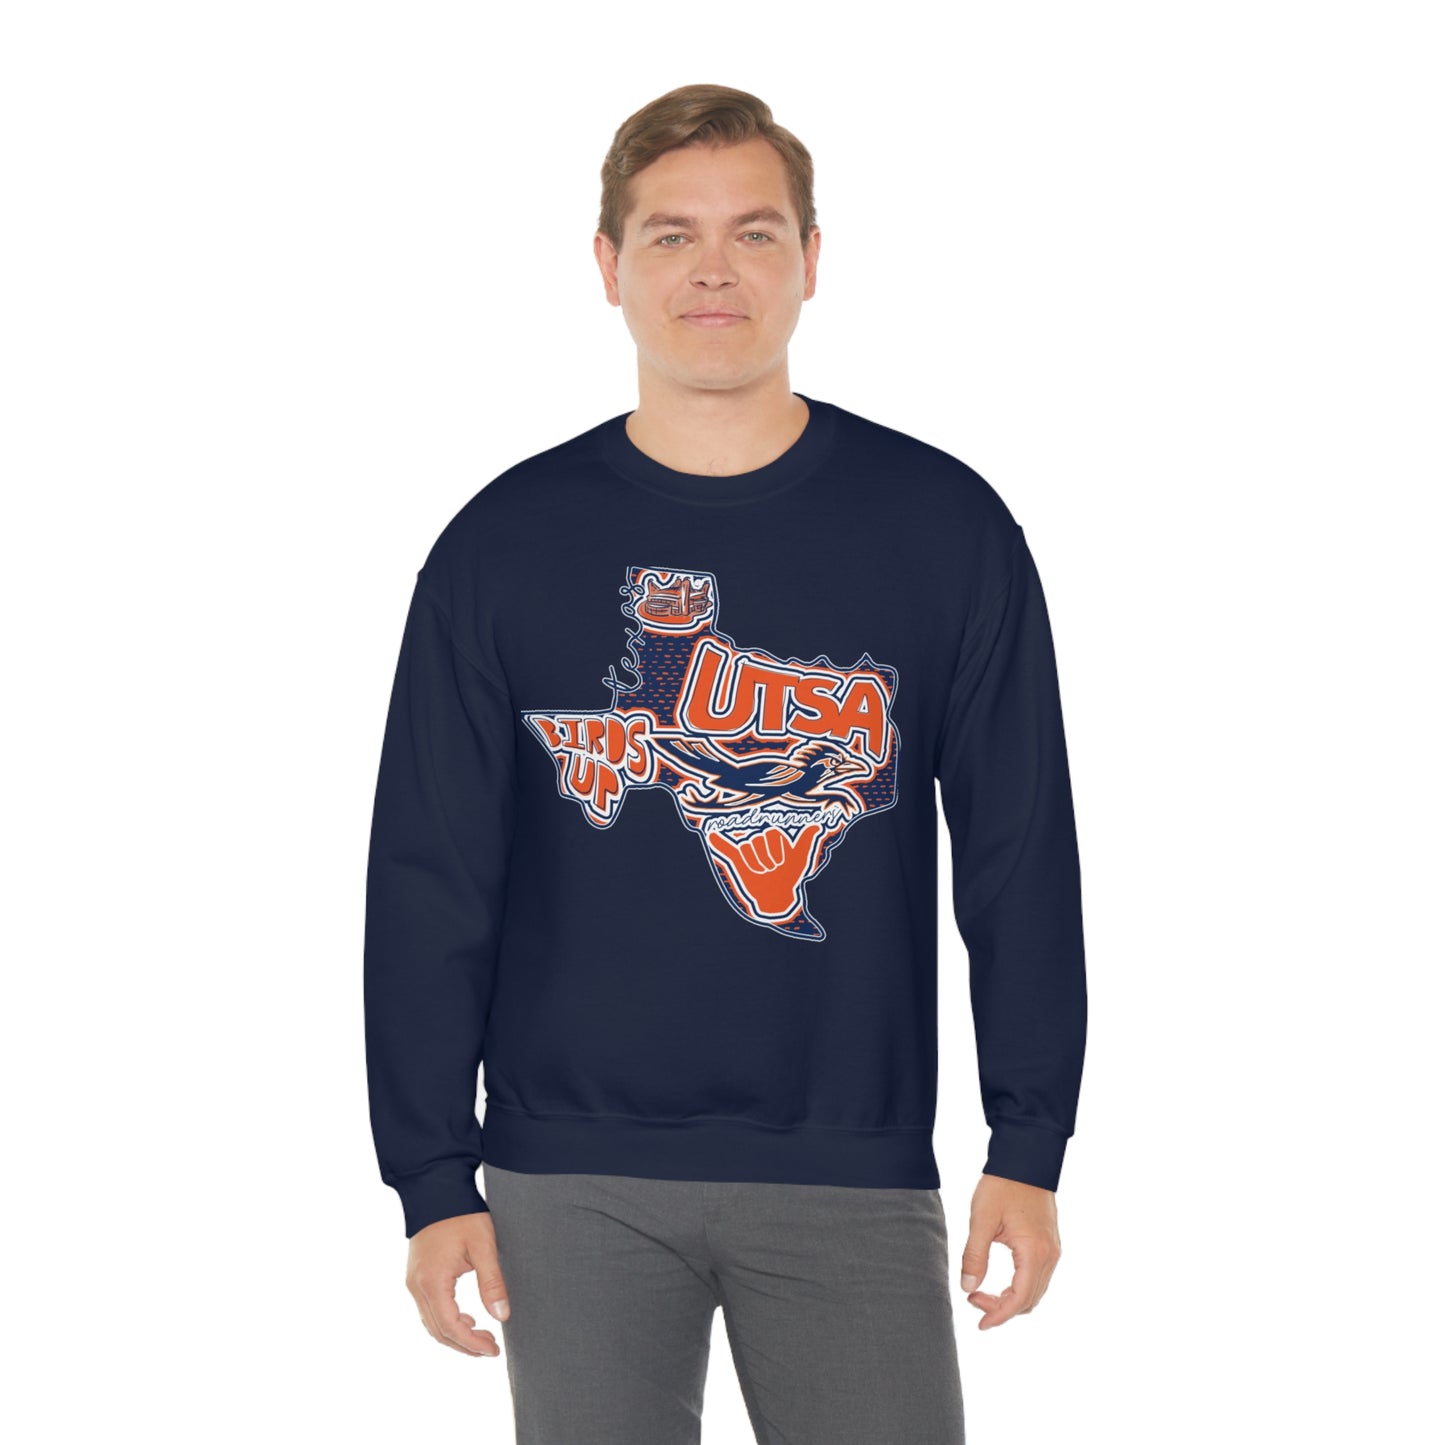 UTSA Football Unisex Heavy Blend Crewneck Sweatshirt